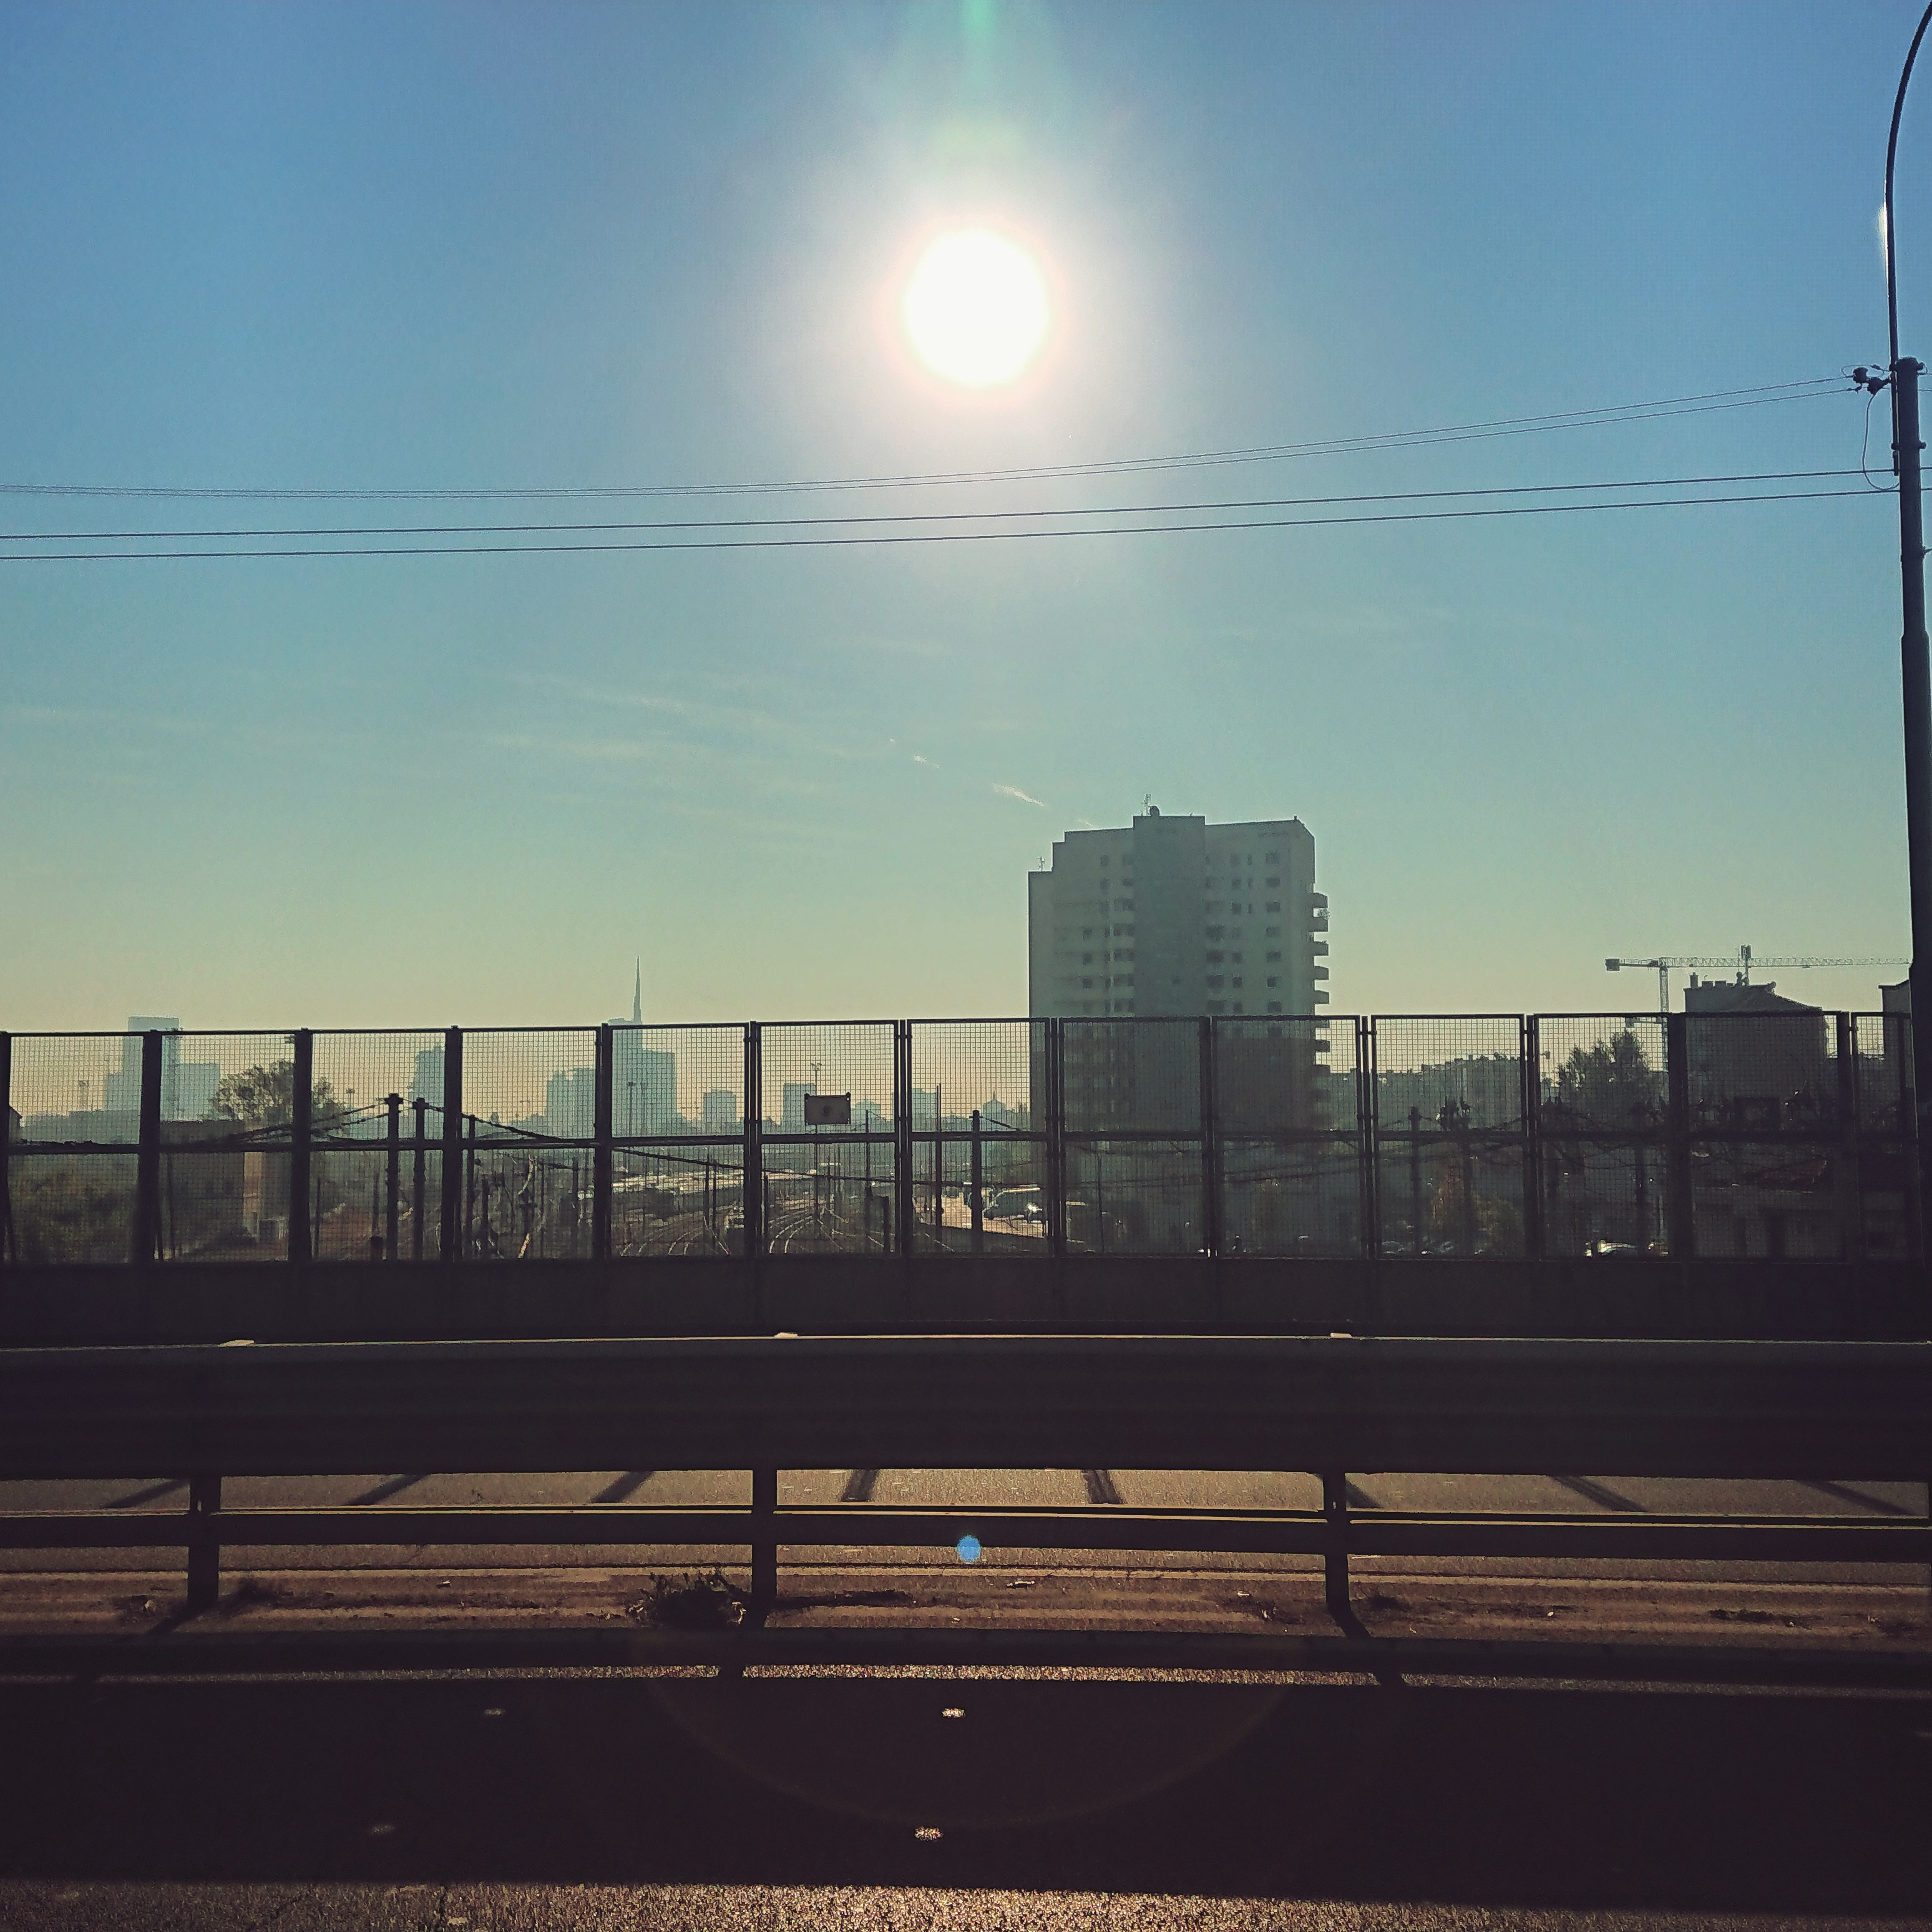 Bridge, rails and scorching sun